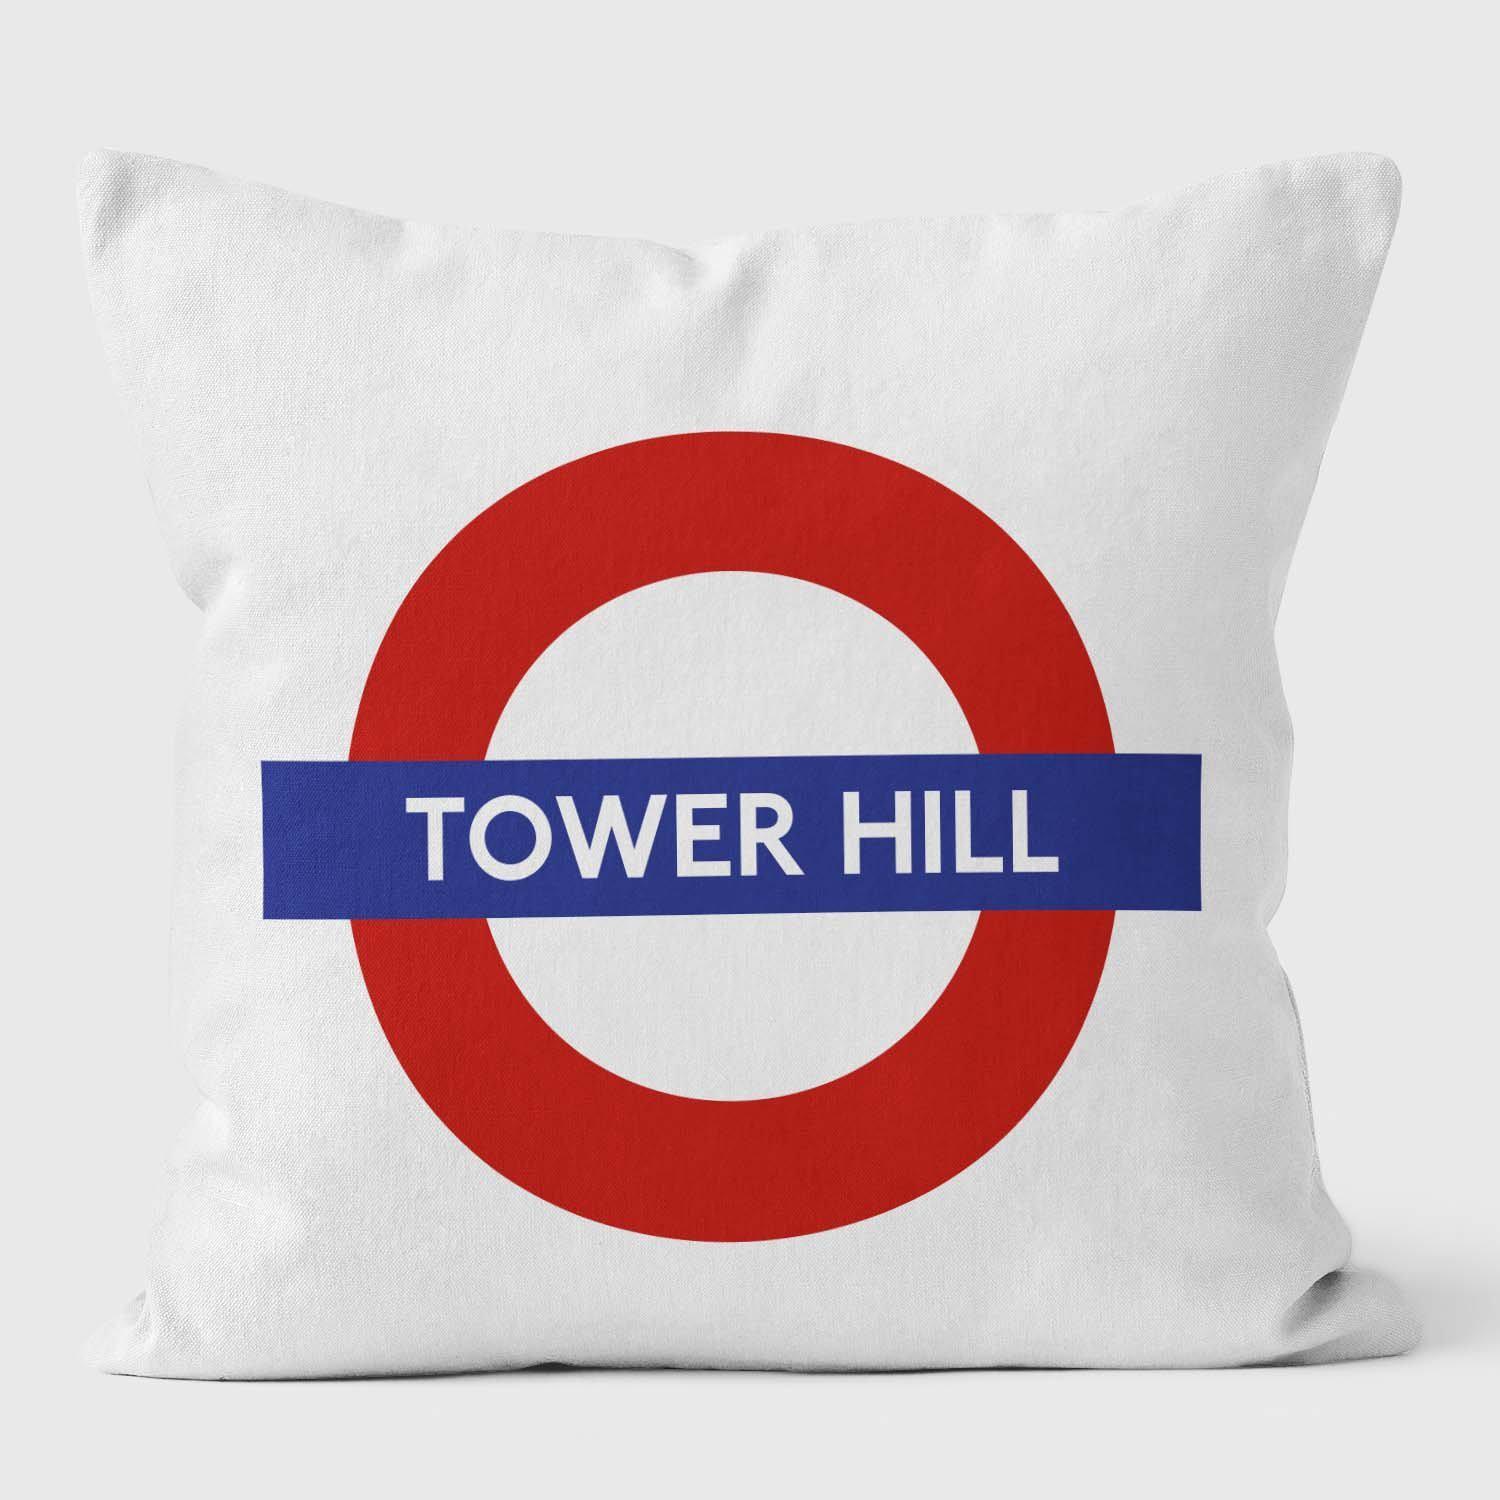 Tower Hill London Underground Tube Station Roundel Cushion - Handmade Cushions UK - WeLoveCushions